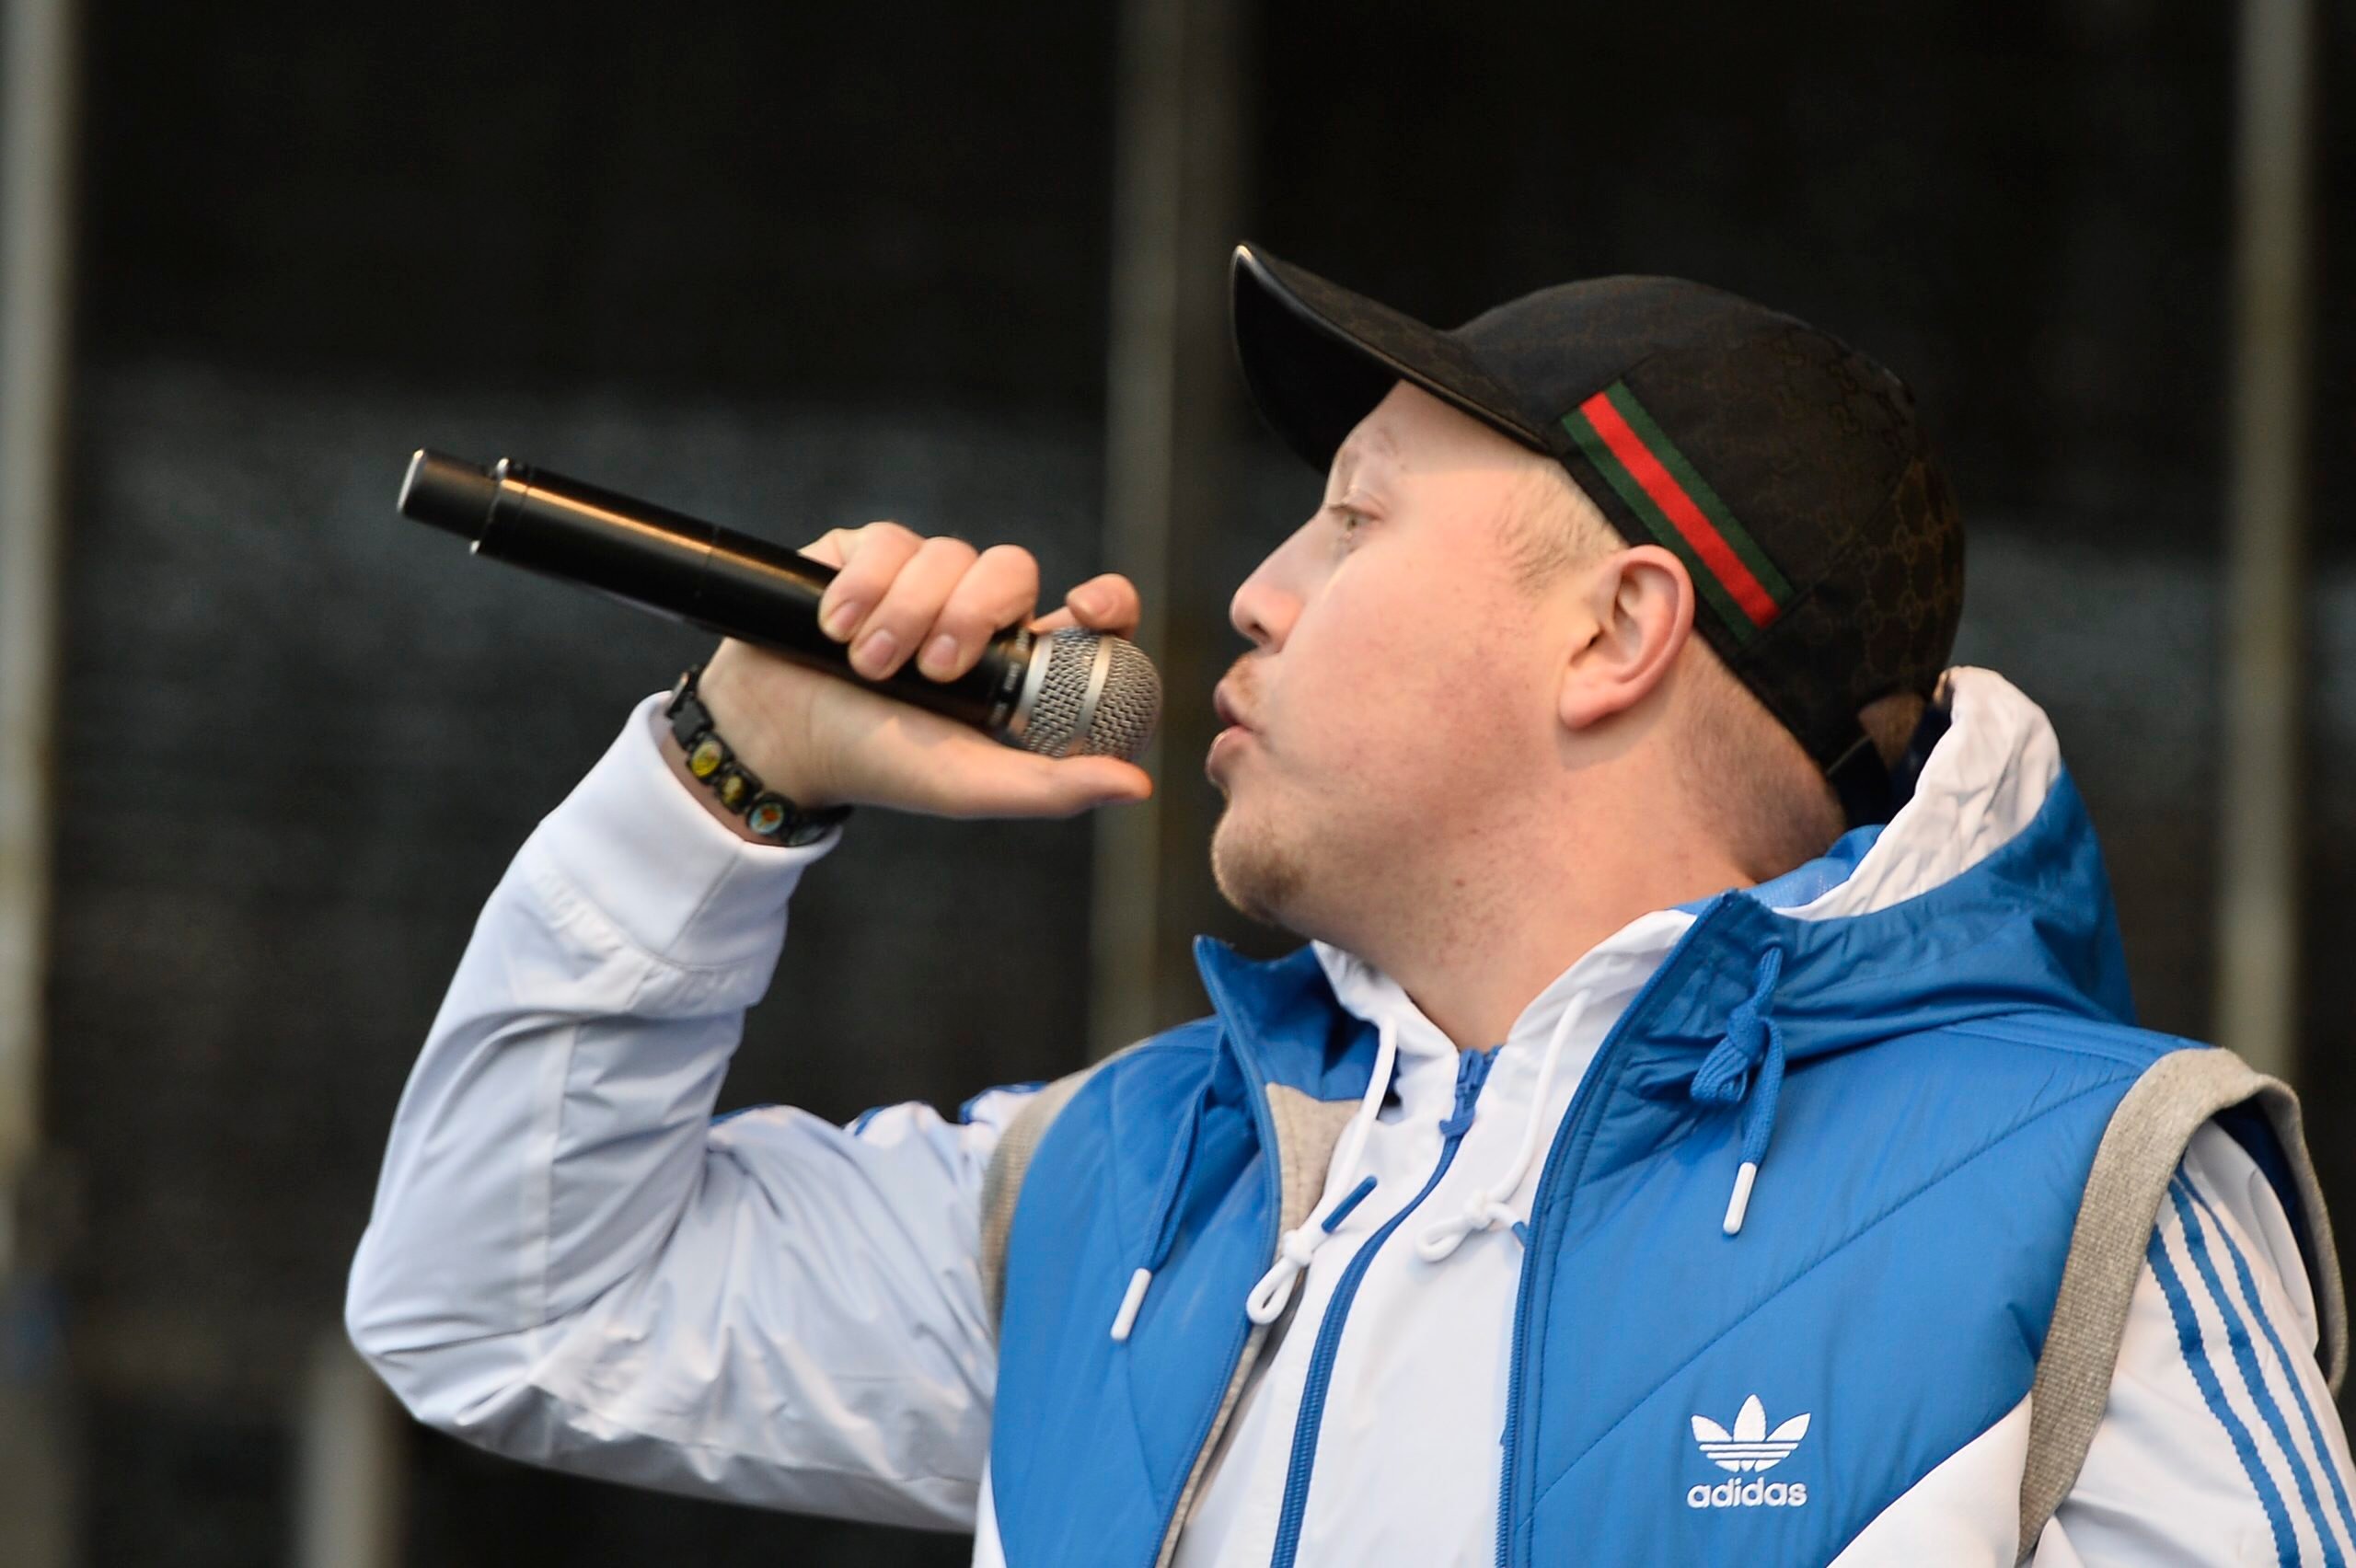 Rapparen Sebbe Staxx från hip hop-gruppen Kartellen uppträdde på scen.